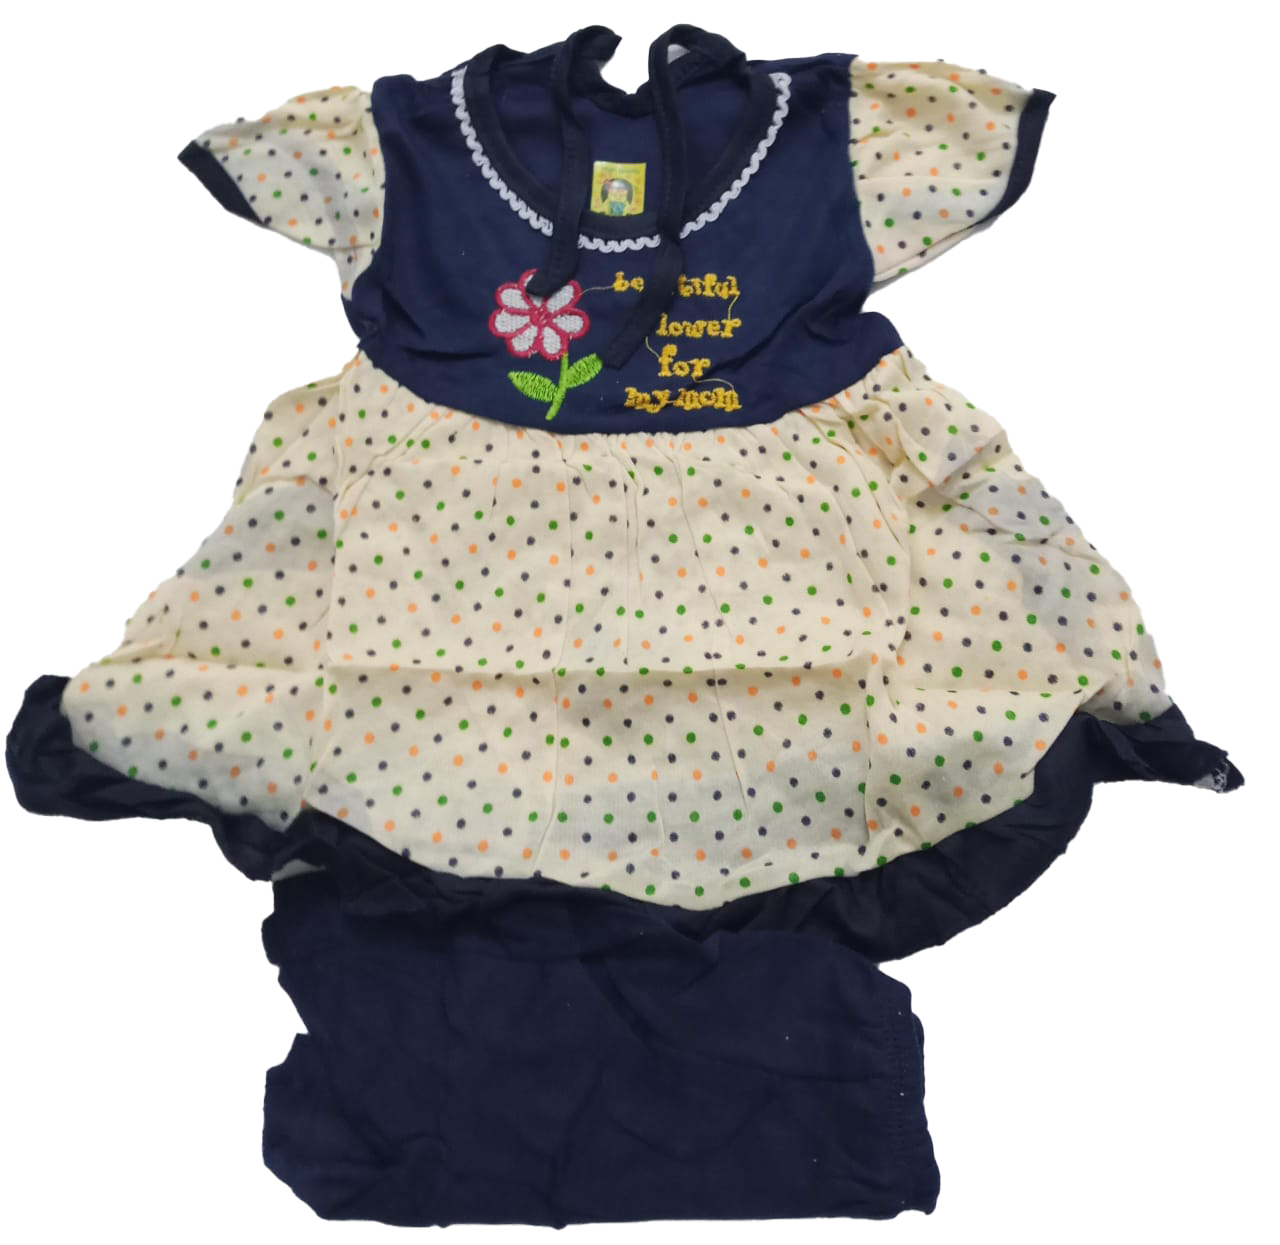 Elegant Comfy Newborn Up & Down Clothes Matching Set (Dress & Pants) for Baby Girls | BLC16d